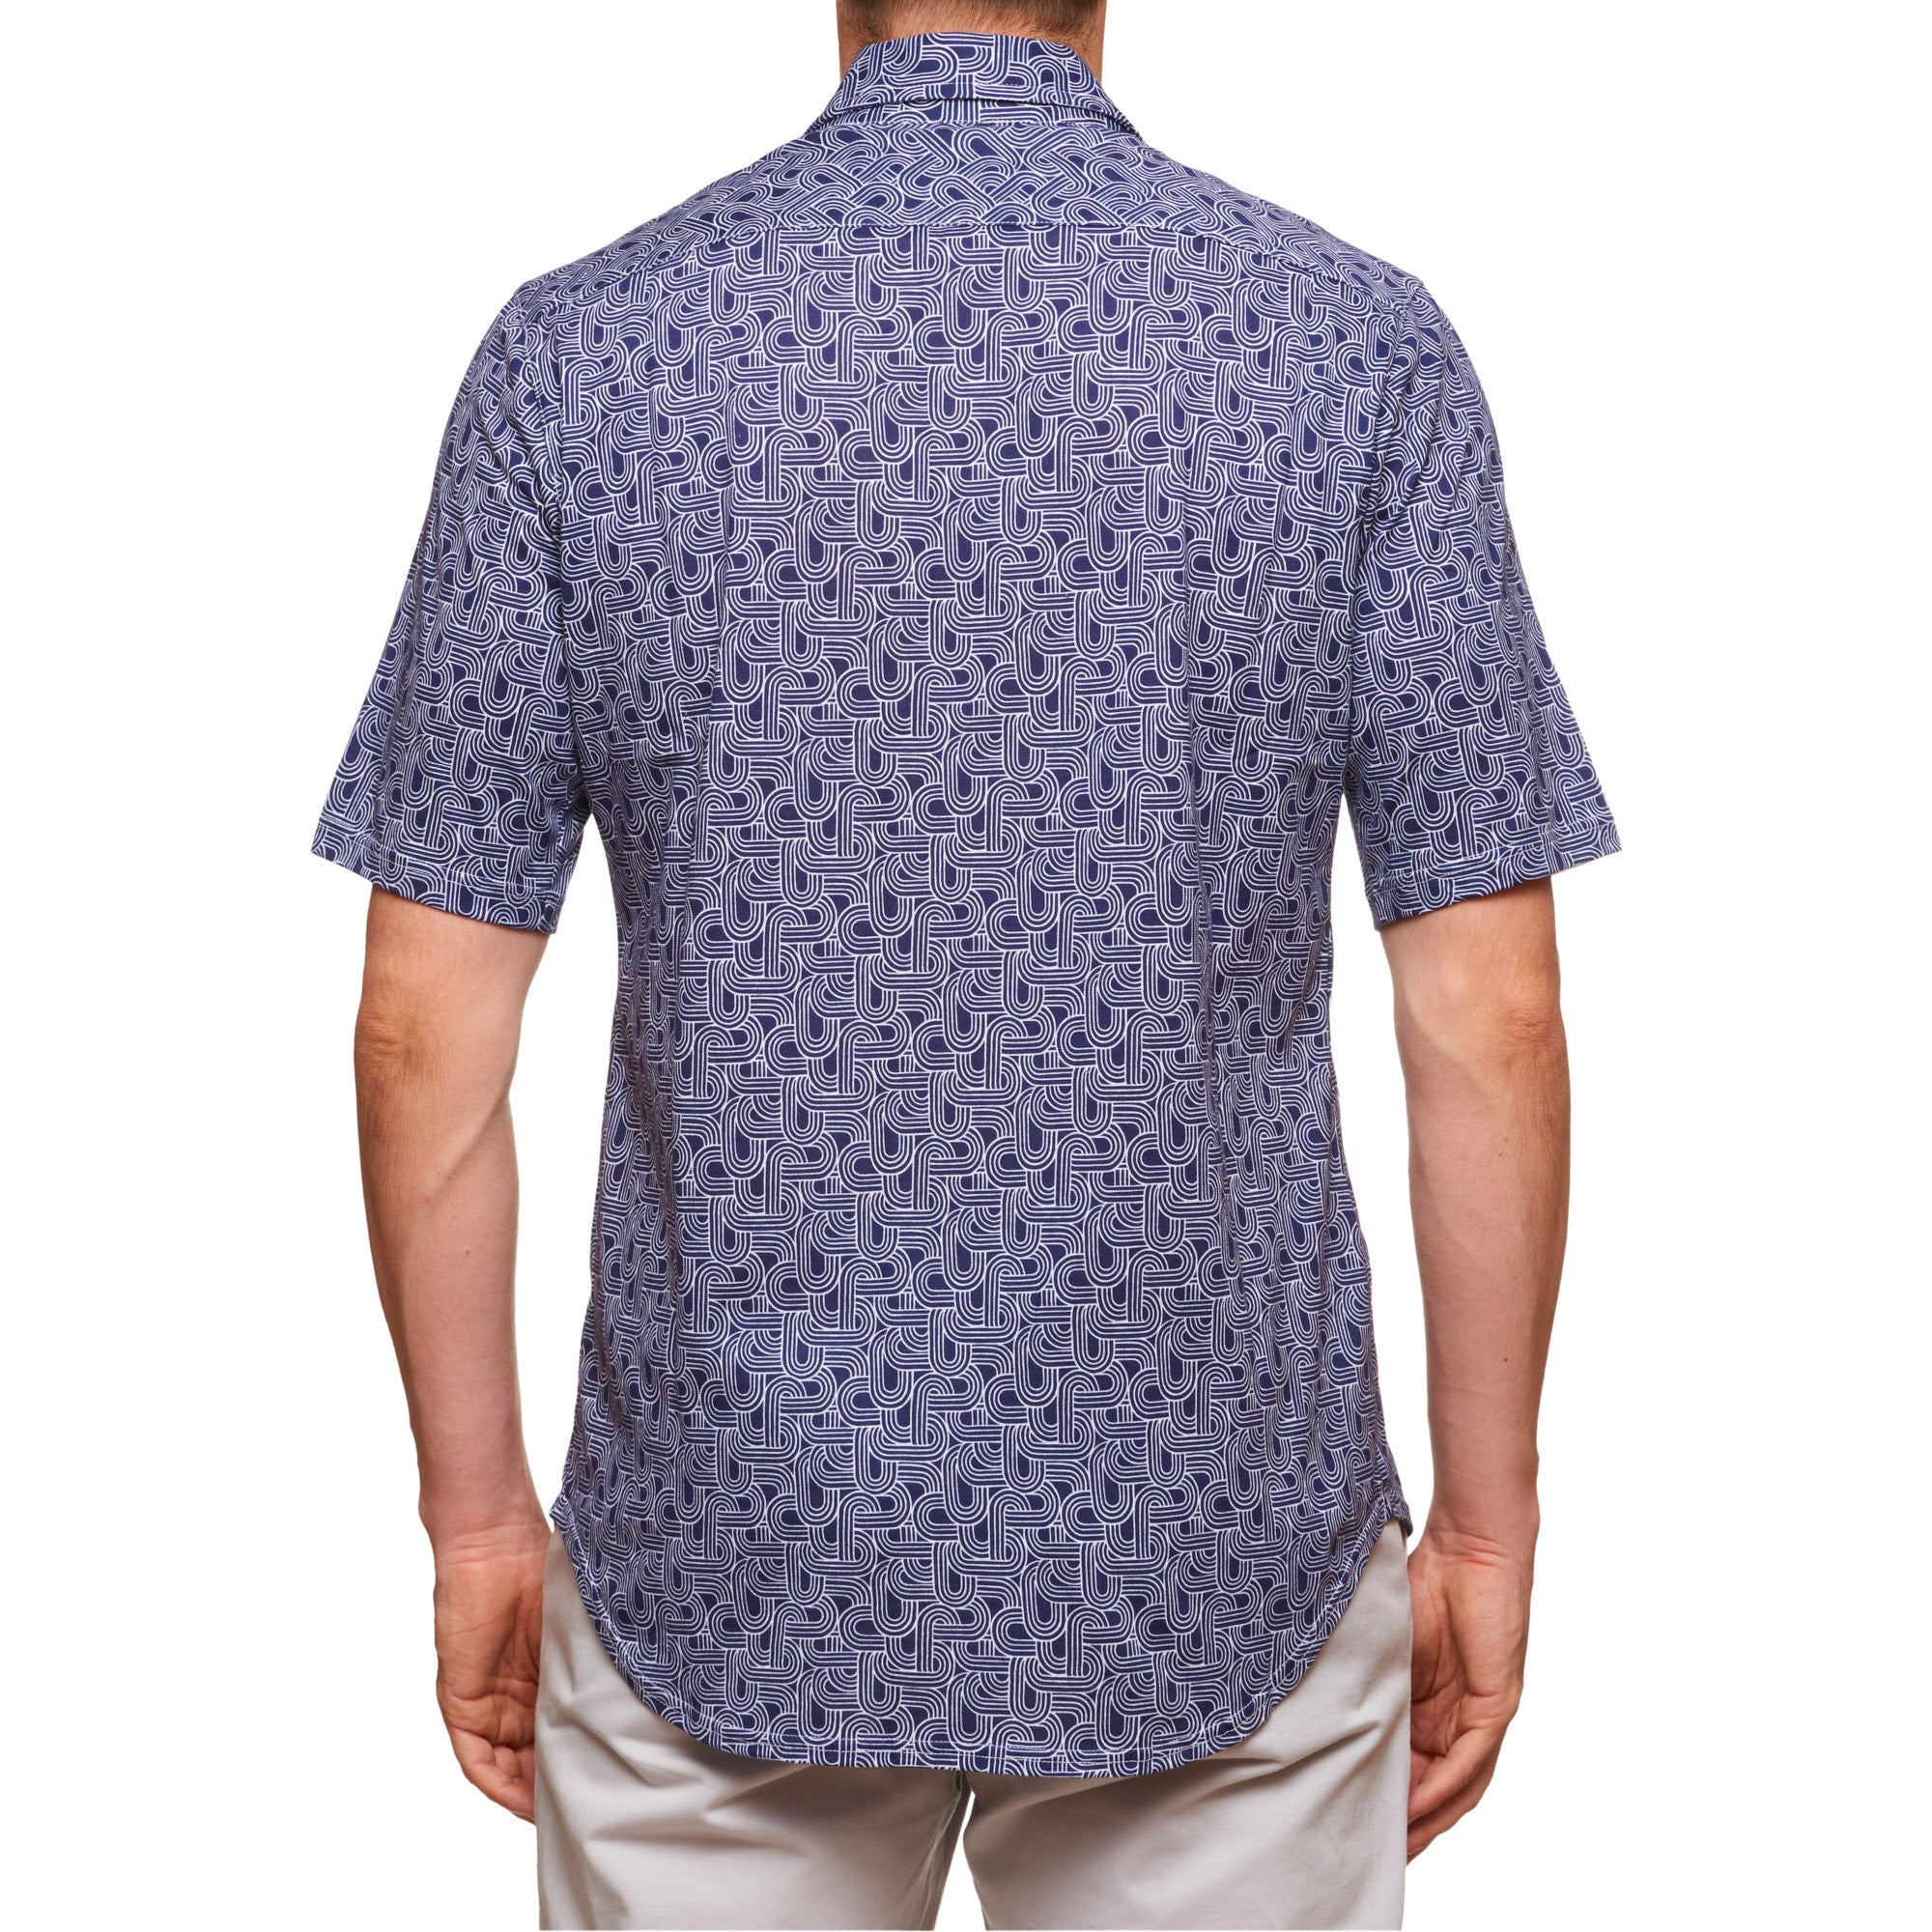 SARTORIO Napoli by KITON Navy Blue Geometric Cotton Short Sleeve Casual Shirt NEW SARTORIO